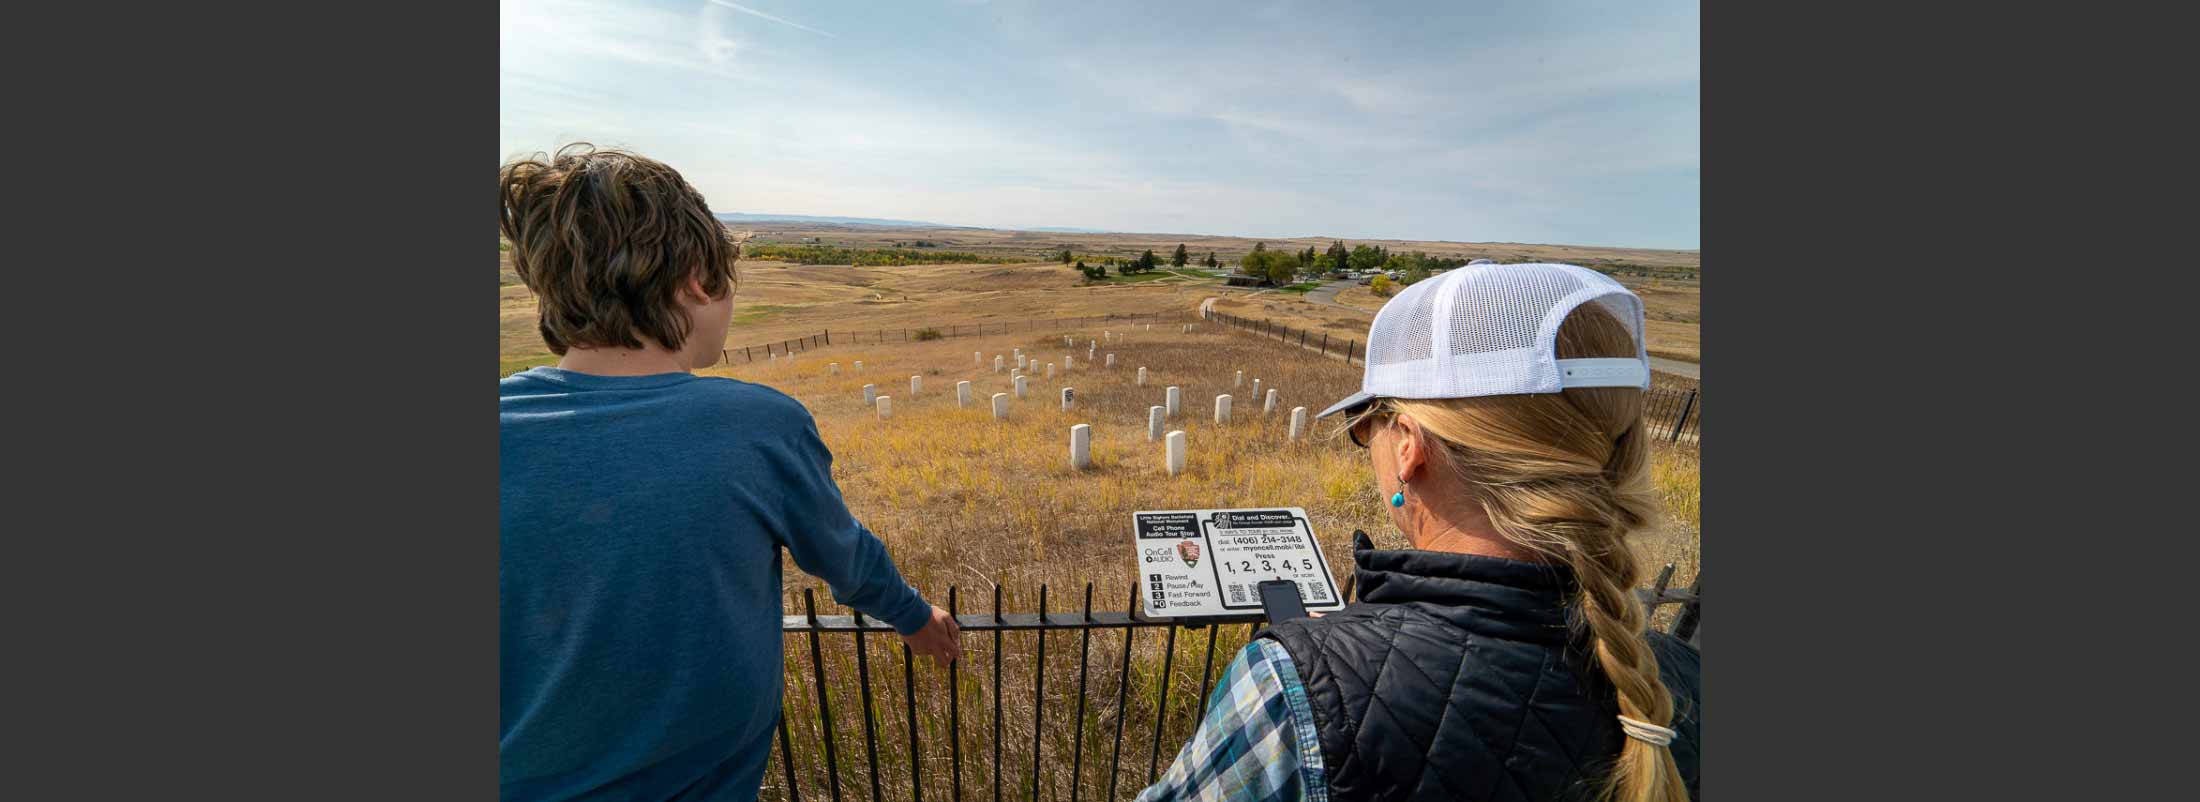 Visiting Battlefields in Montana